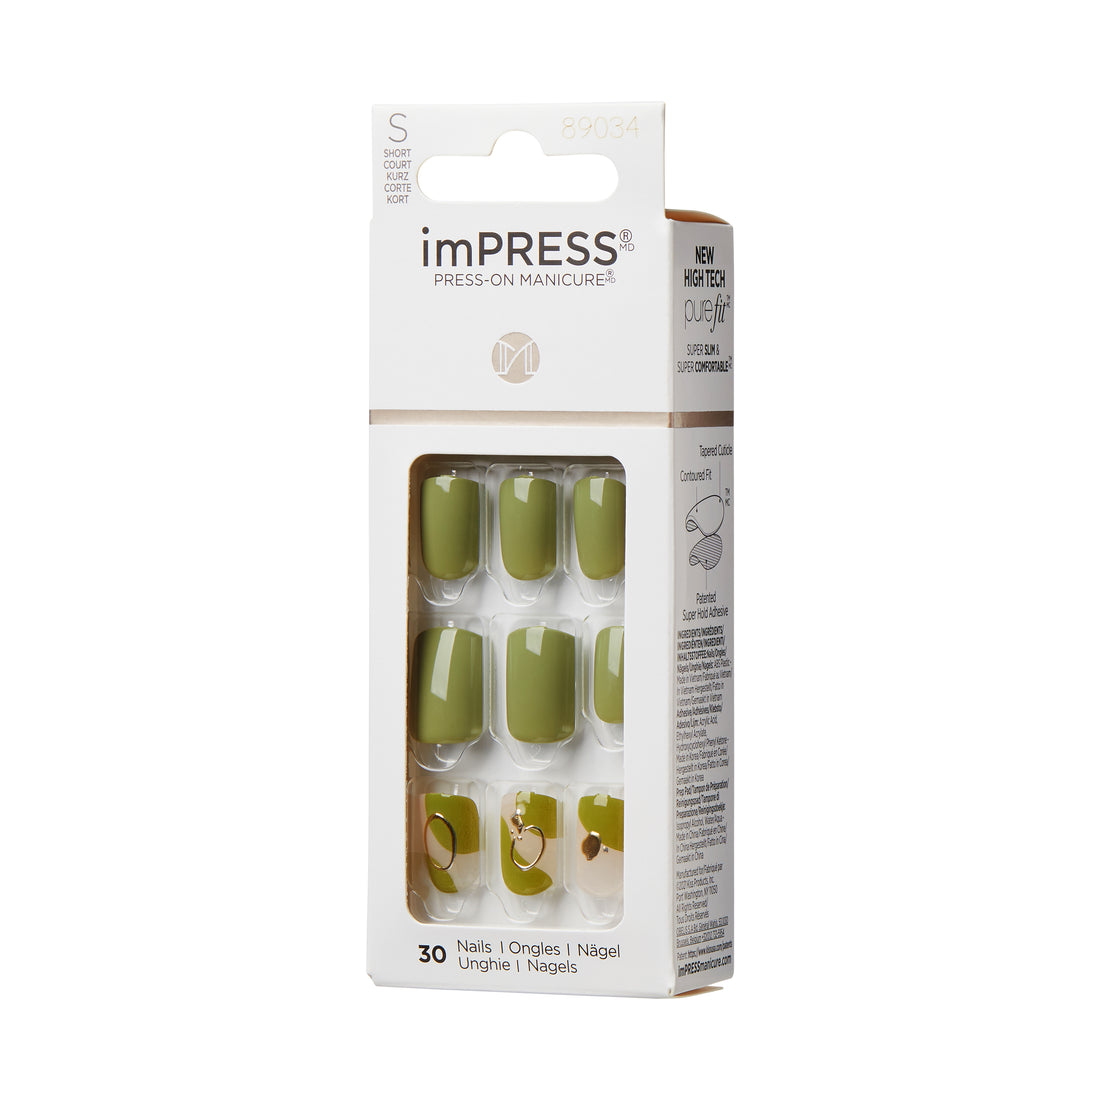 imPRESS Press-On Nails - Before Sunrise